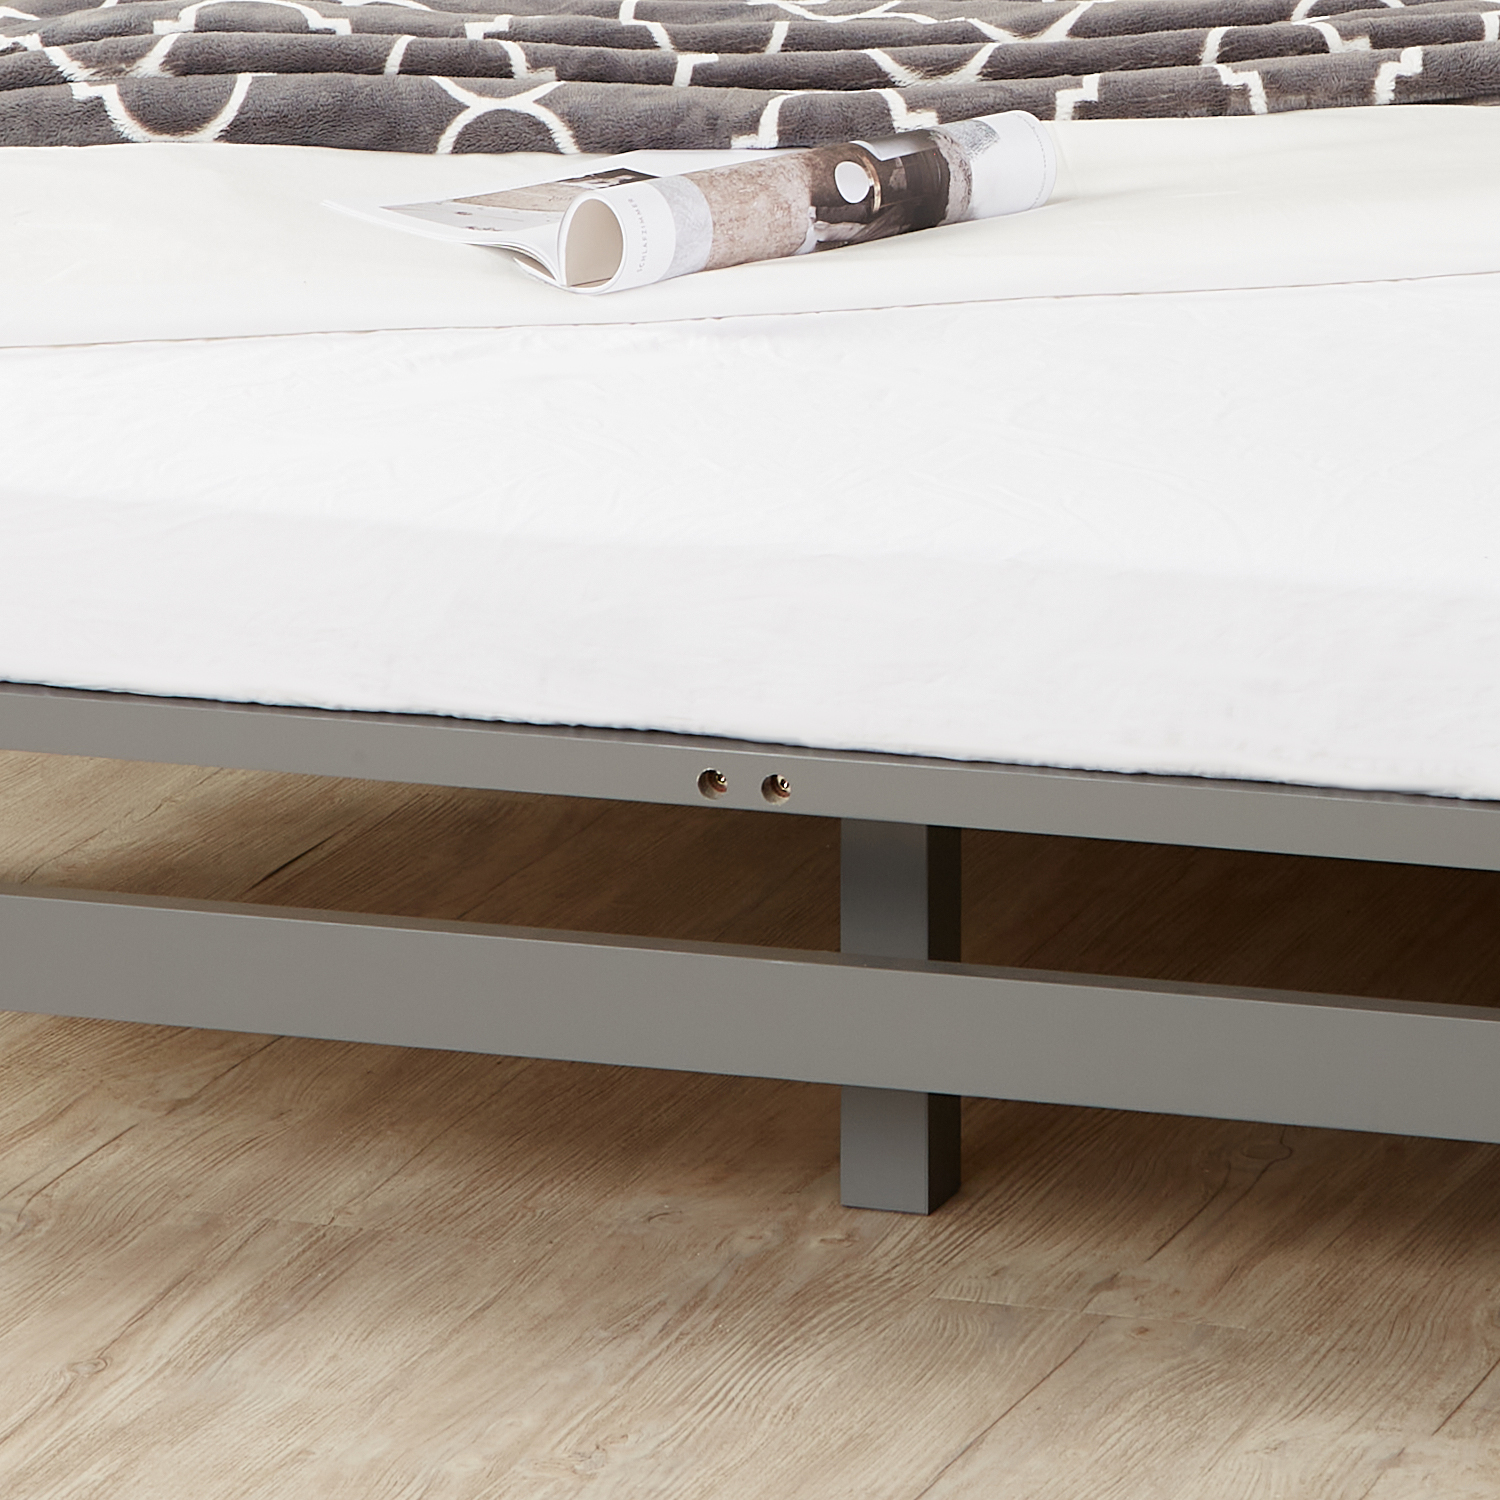 Pallet bed 140x200 cm solid wood bed grey pallet furniture bed wooden bed futon bed